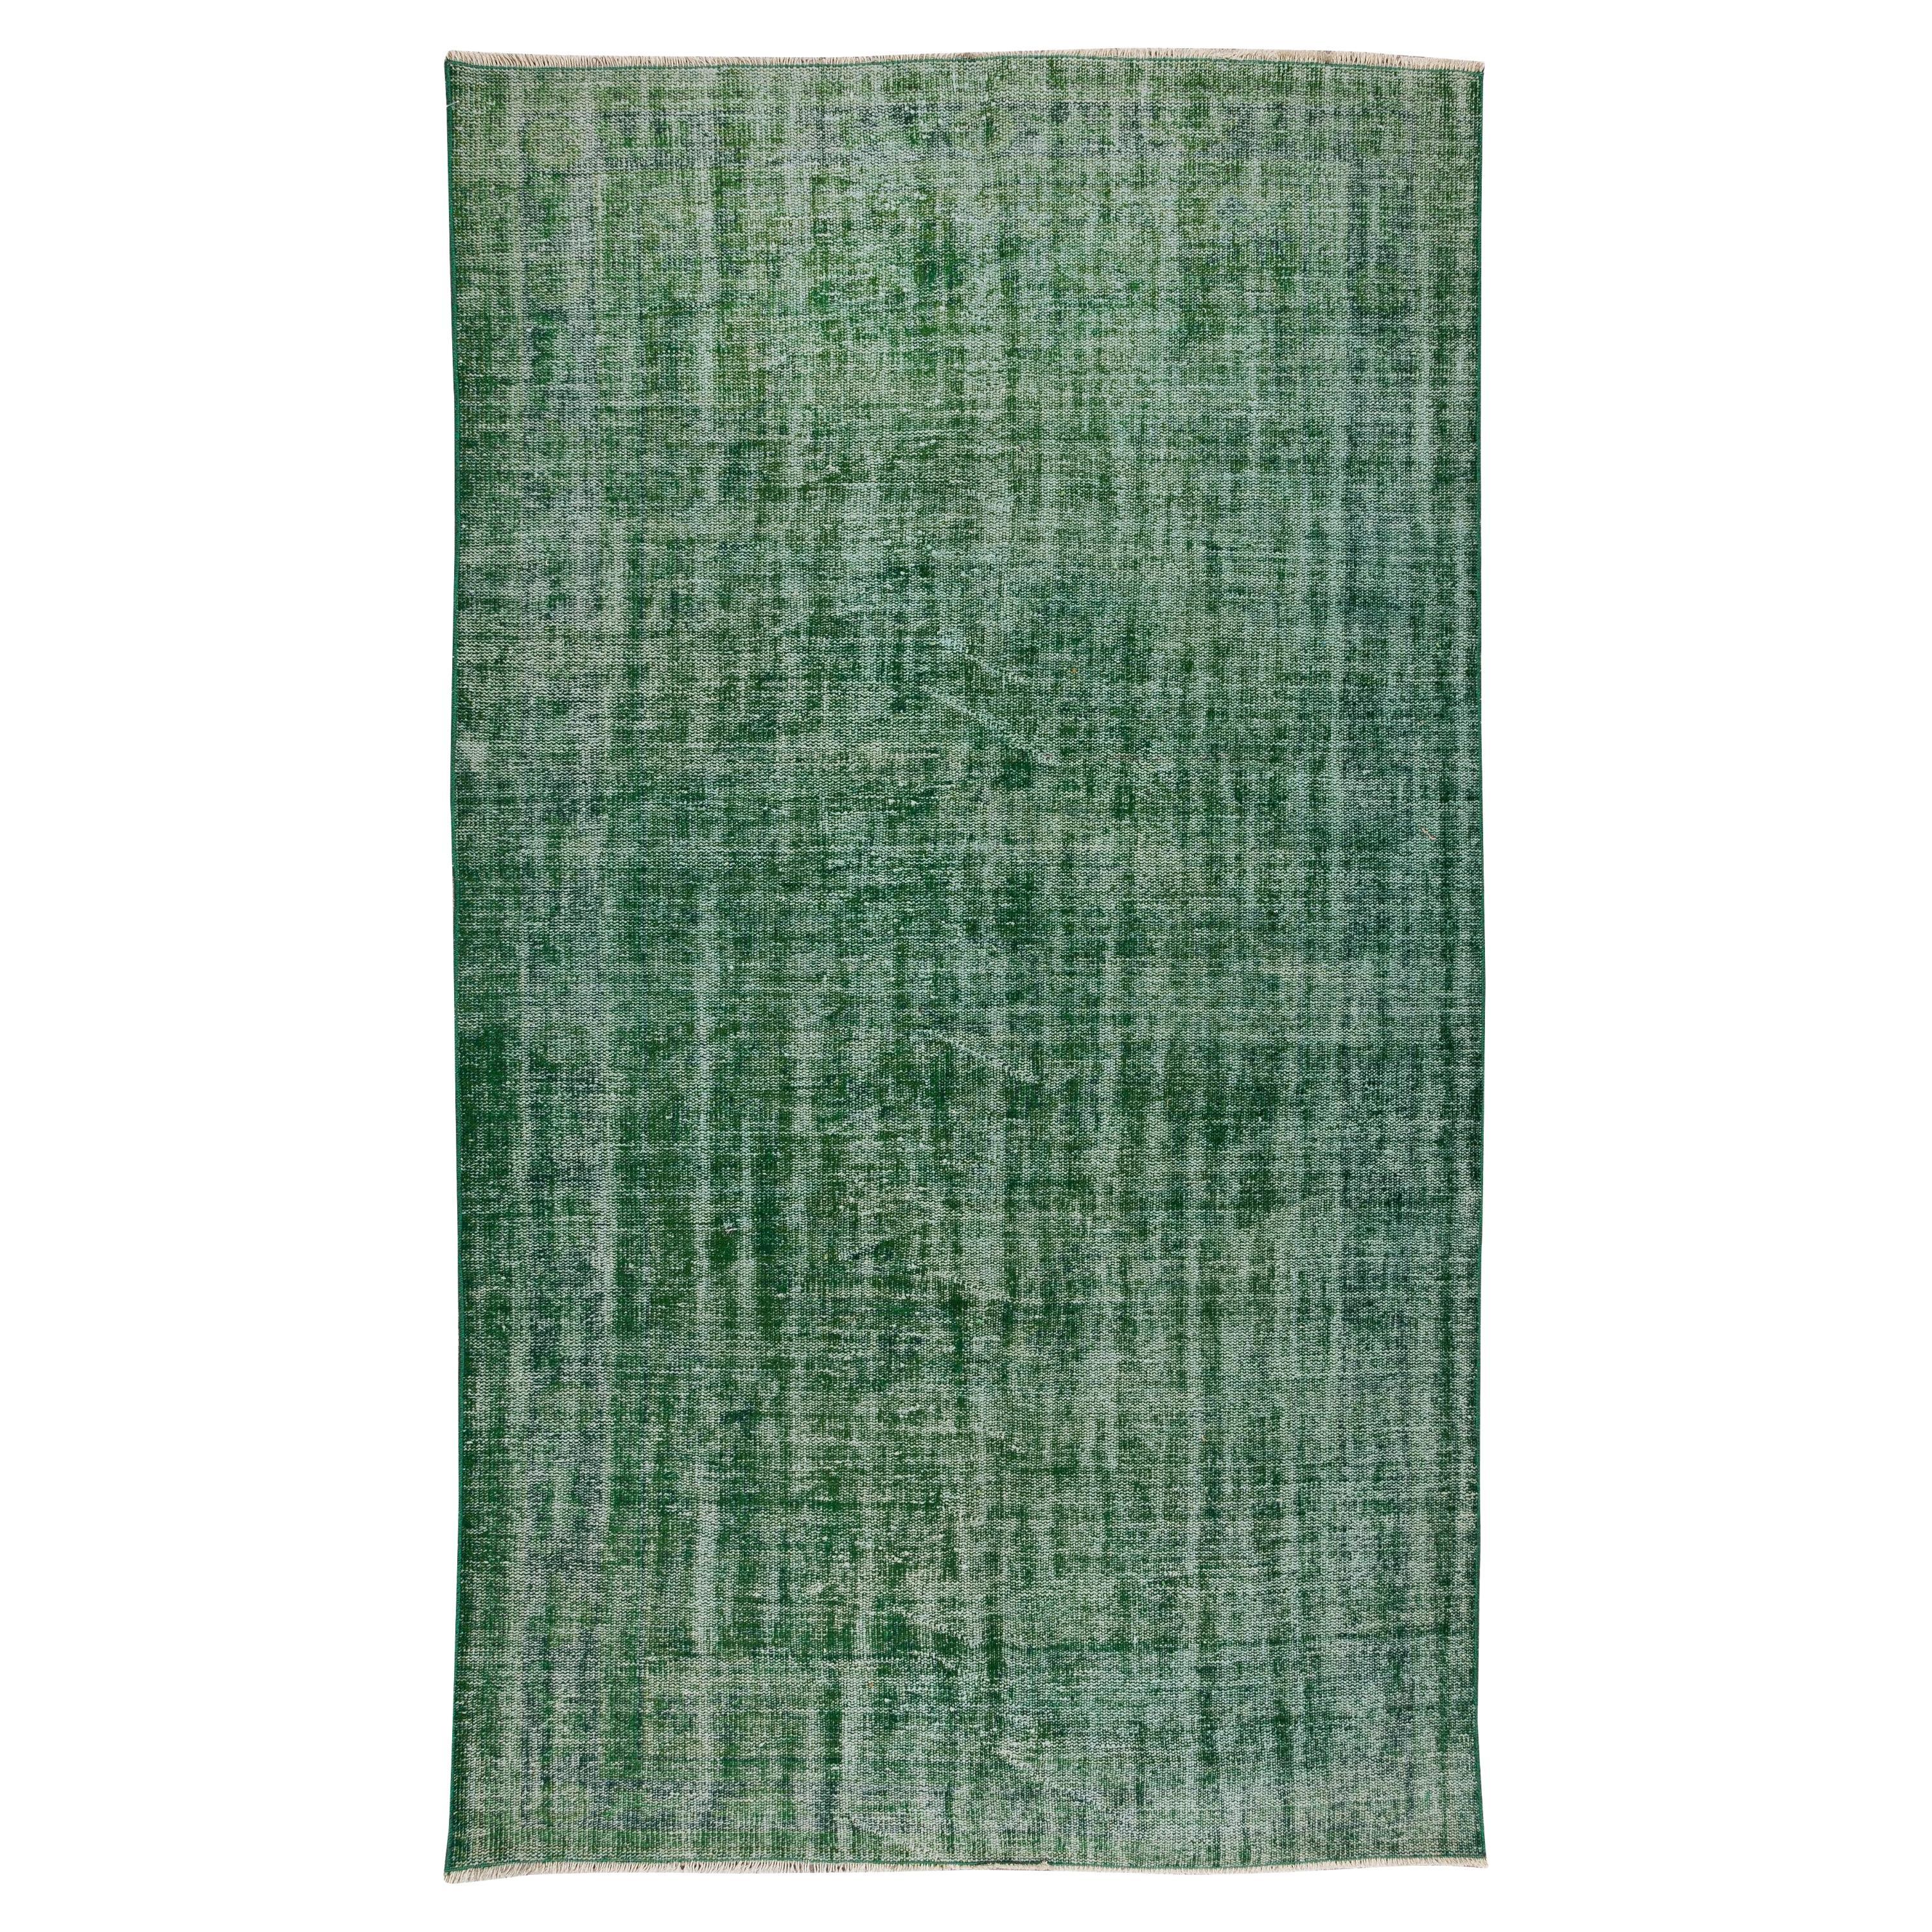 5.7x9.8 Ft Handmade Vintage Turkish Rug, Plain Green Contemporary Wool Carpet For Sale